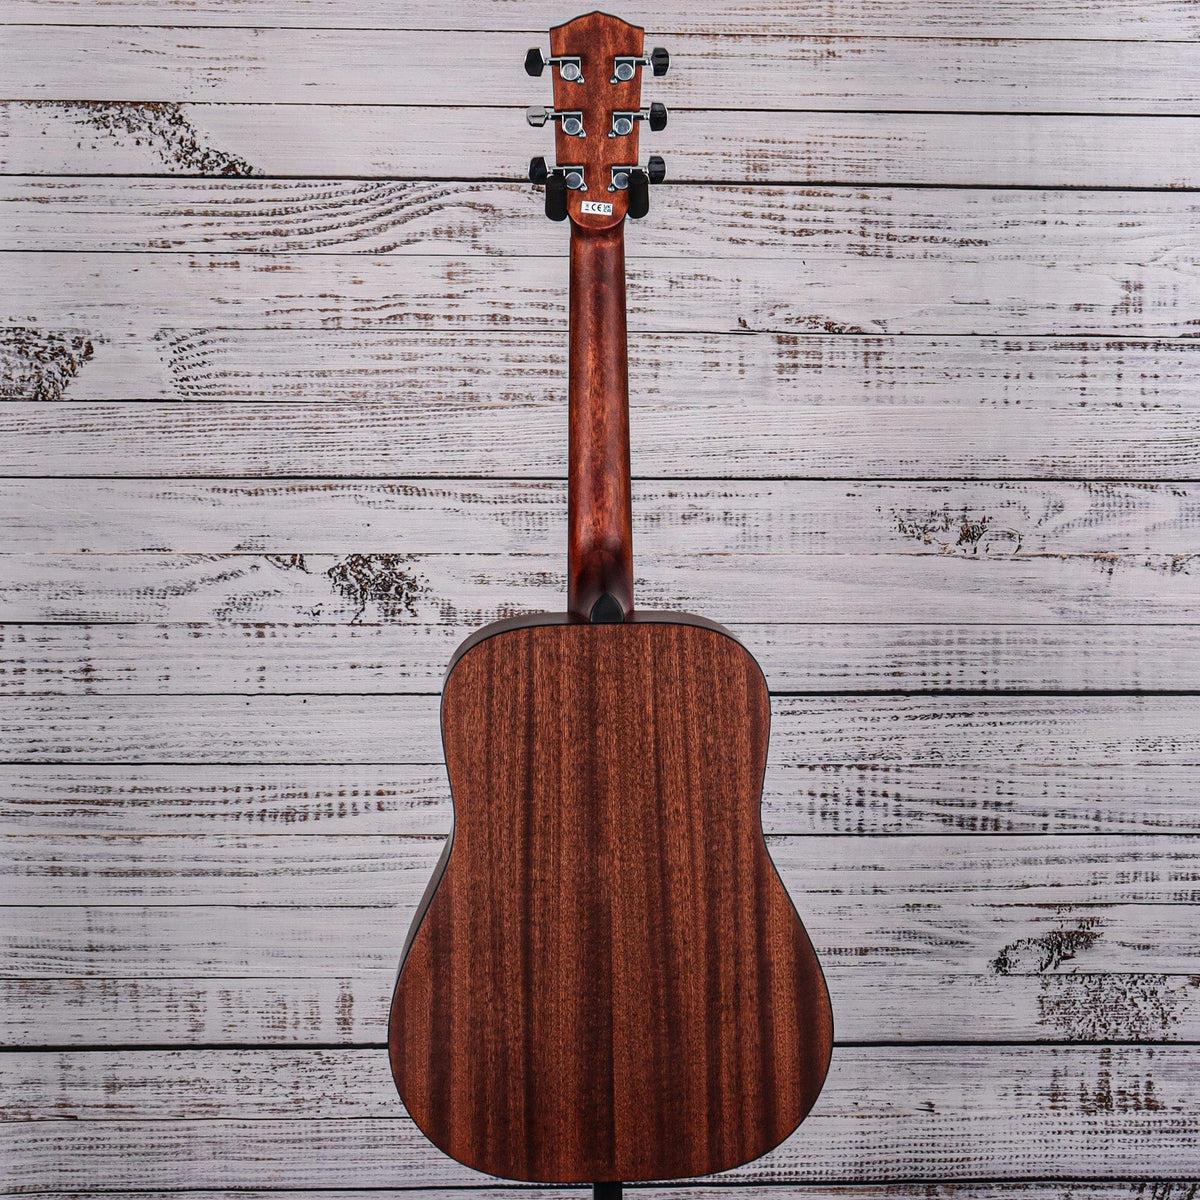 Fender 3/4 Steel String Acoustic Guitar | Green | FA-15GR